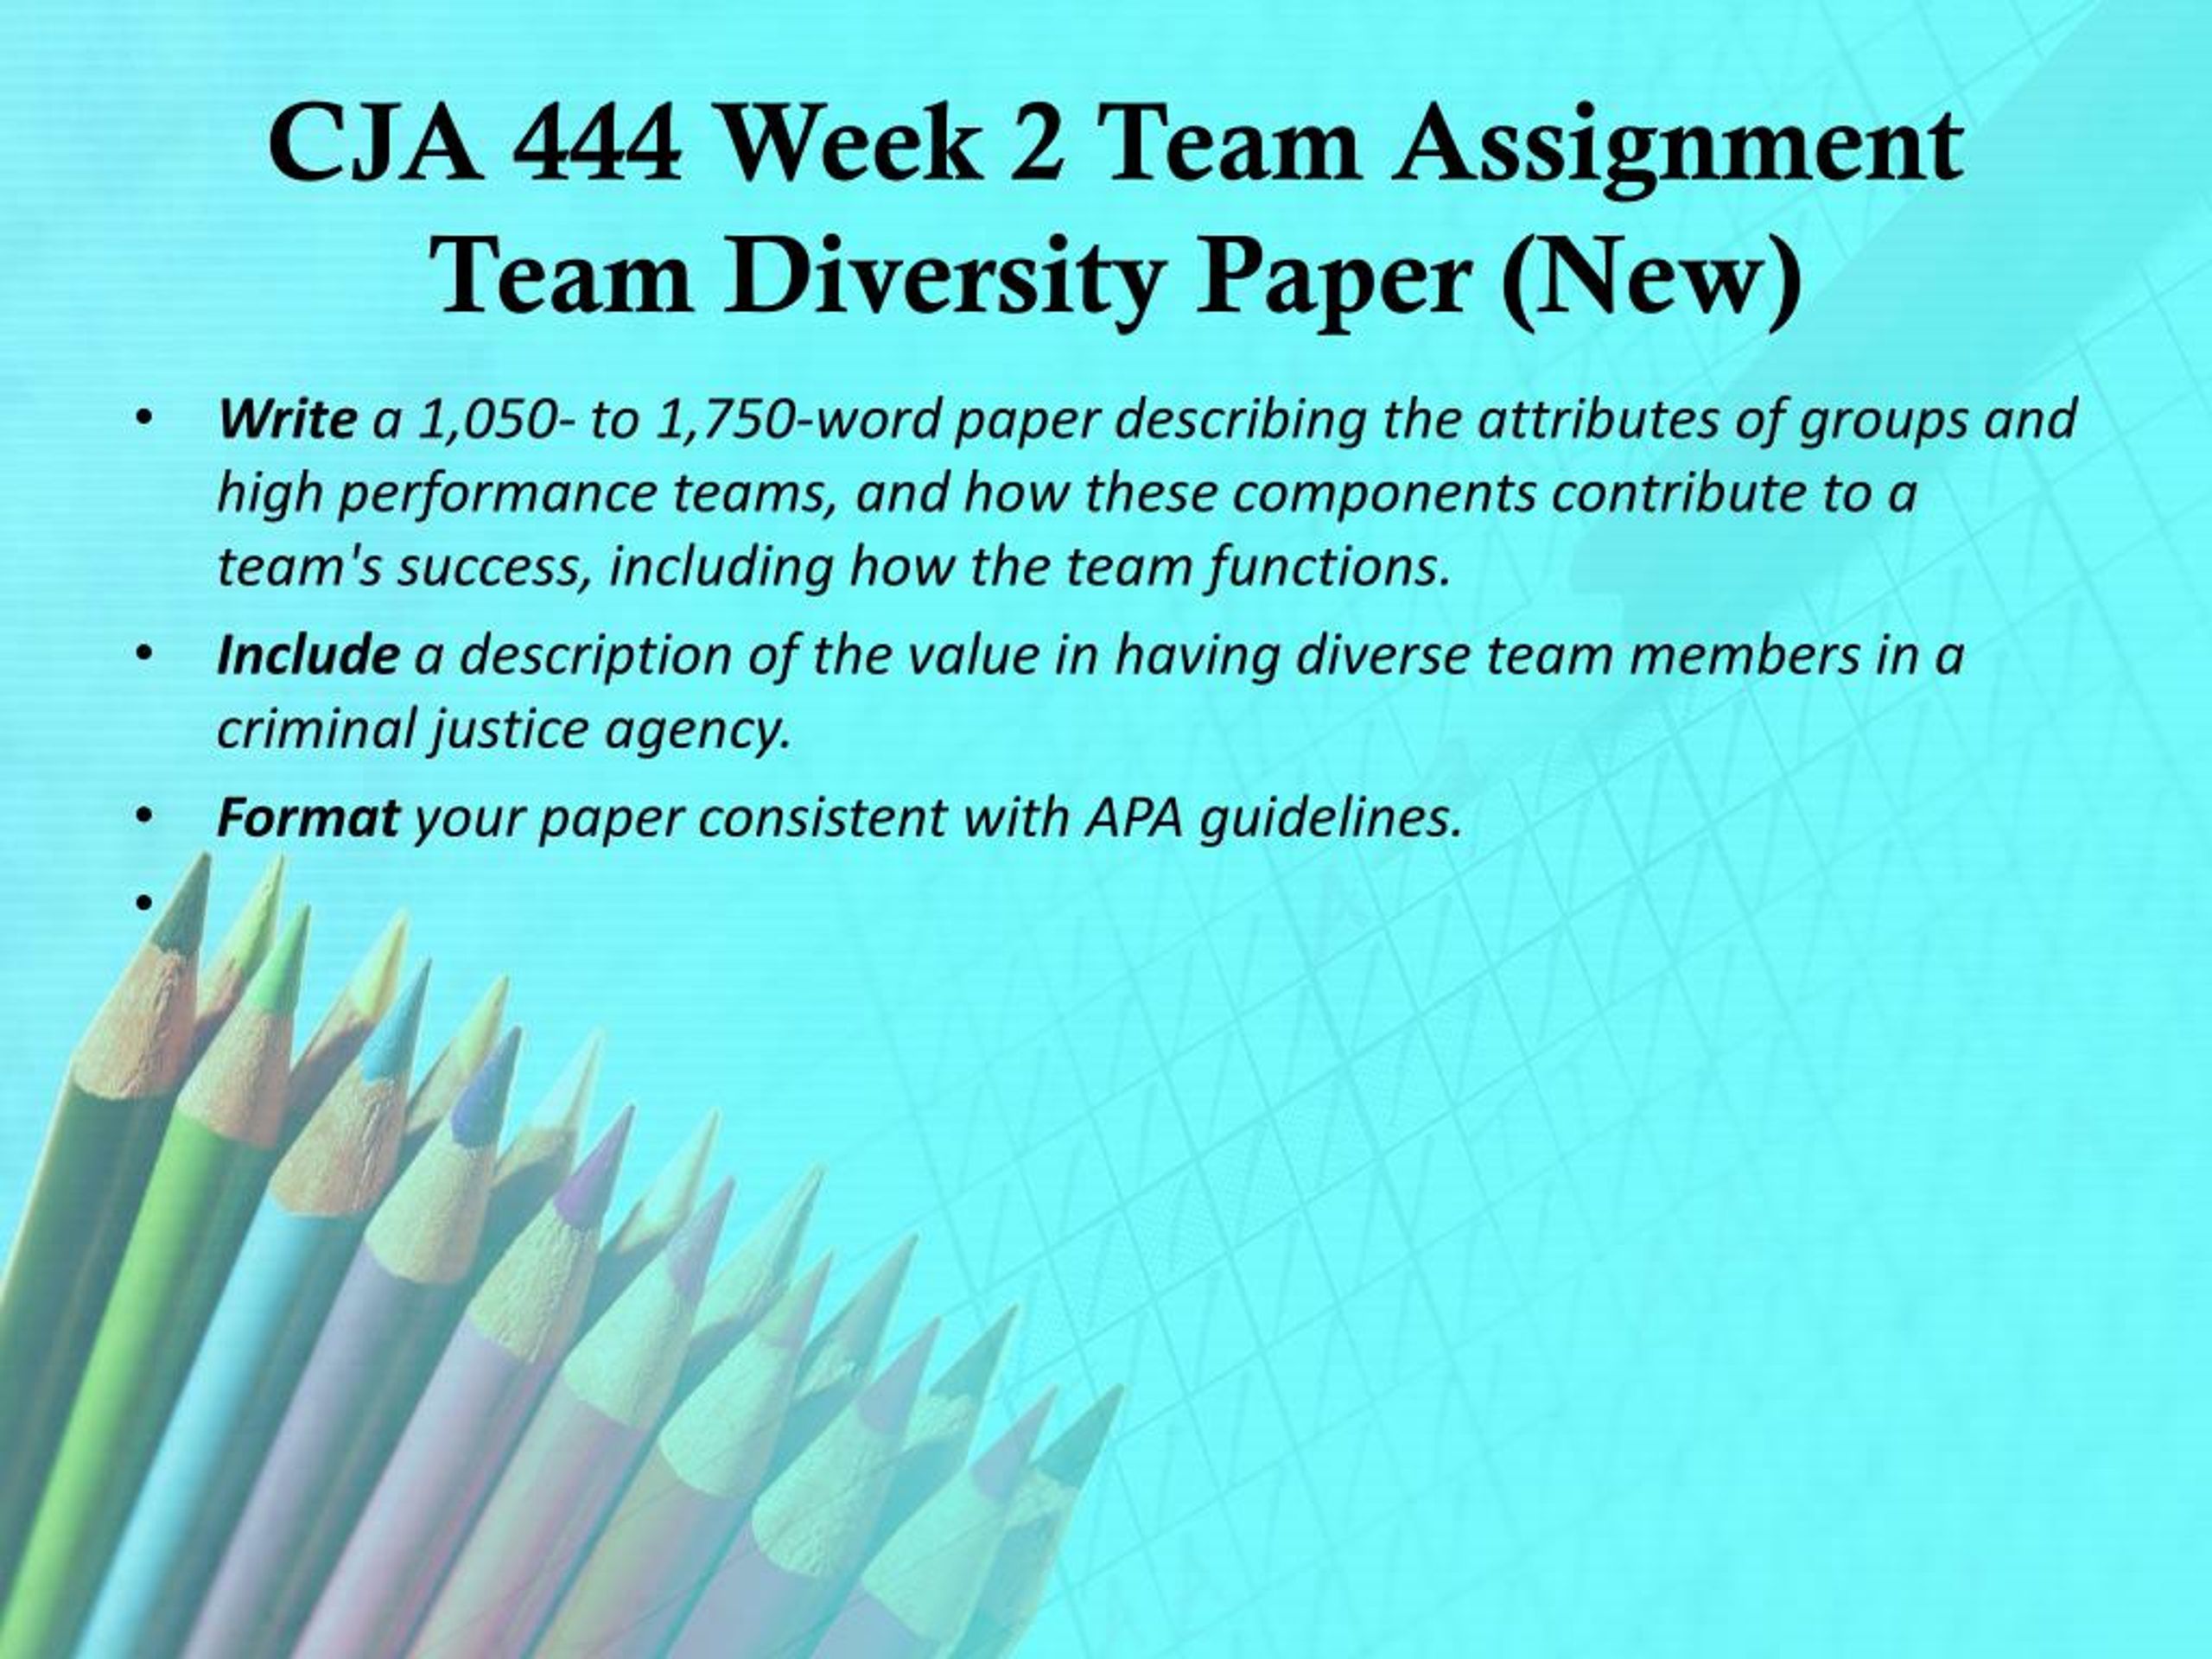 Team Diversity Paper